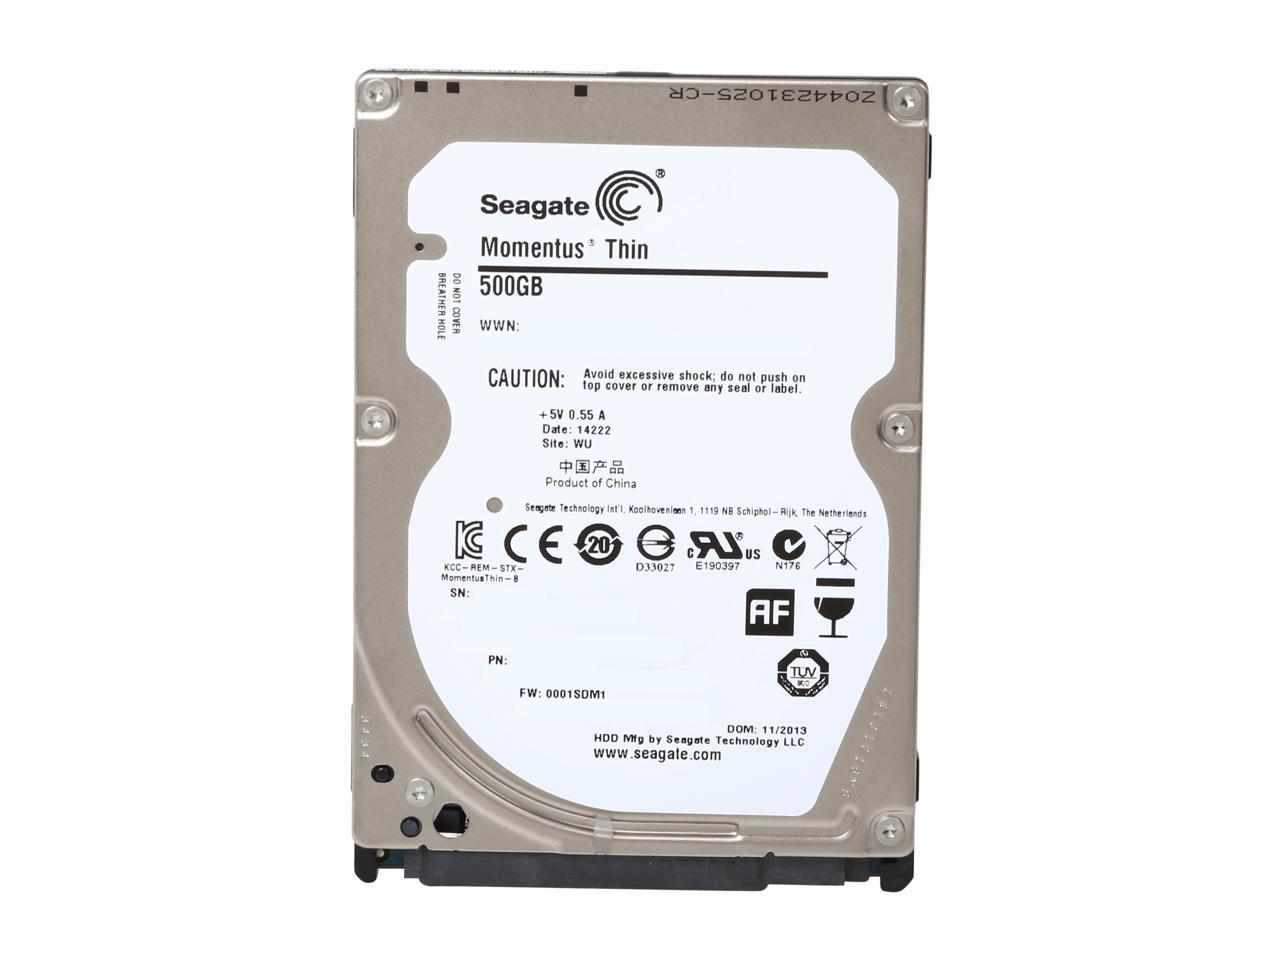 Seagate Momentus Thin ST500LT012 500GB 5400 RPM 16MB Cache SATA 3.0Gb/s 2.5" Internal Notebook Hard Drive Bare Drive